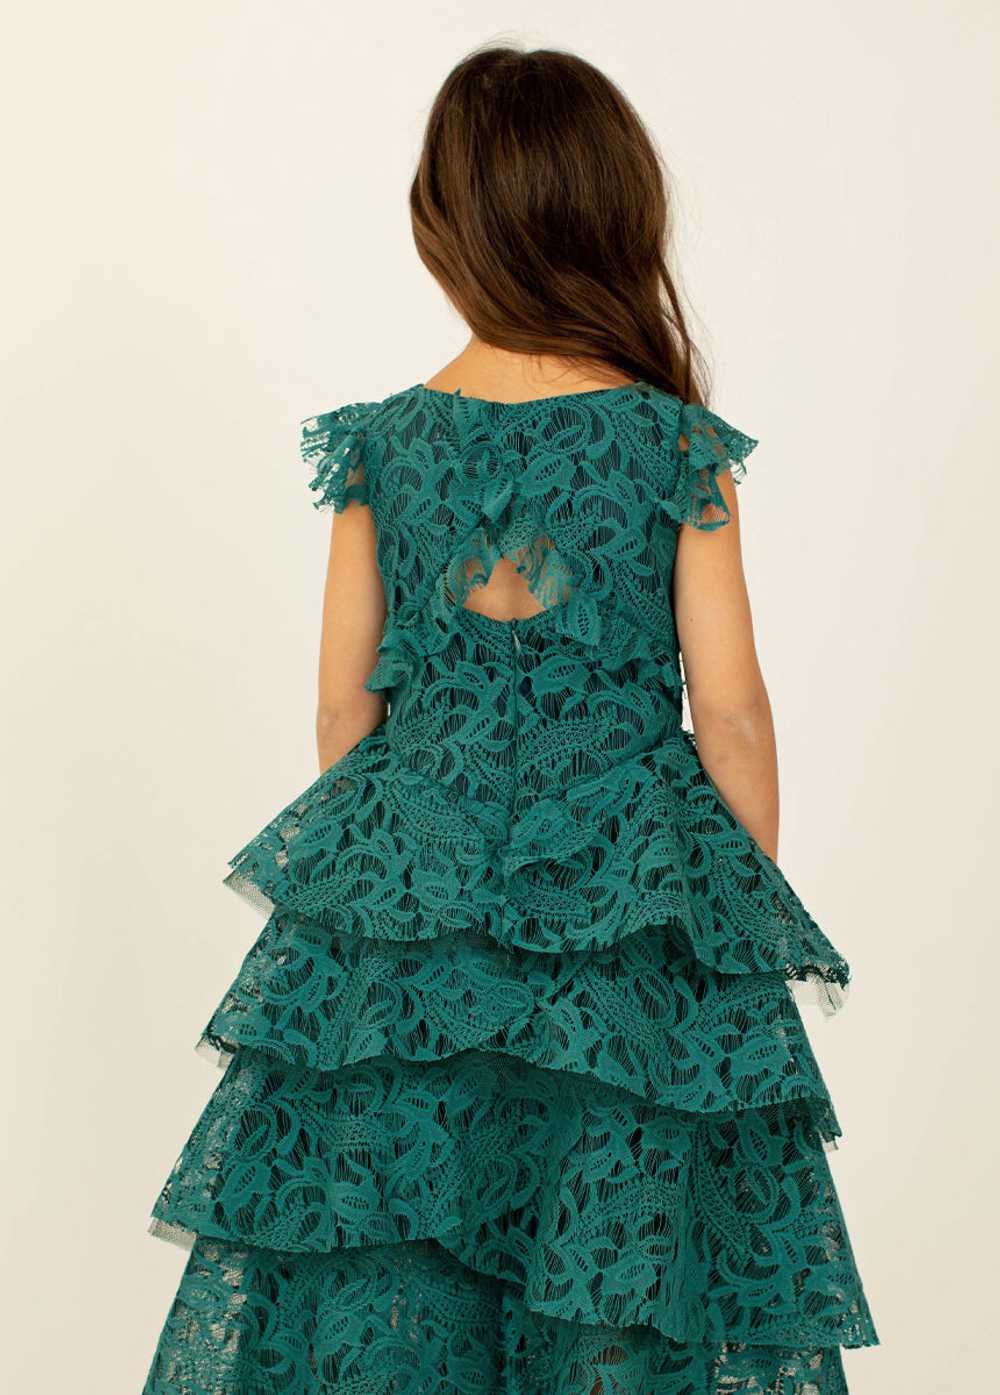 Joyfolie Azalea Dress in Teal - image 3